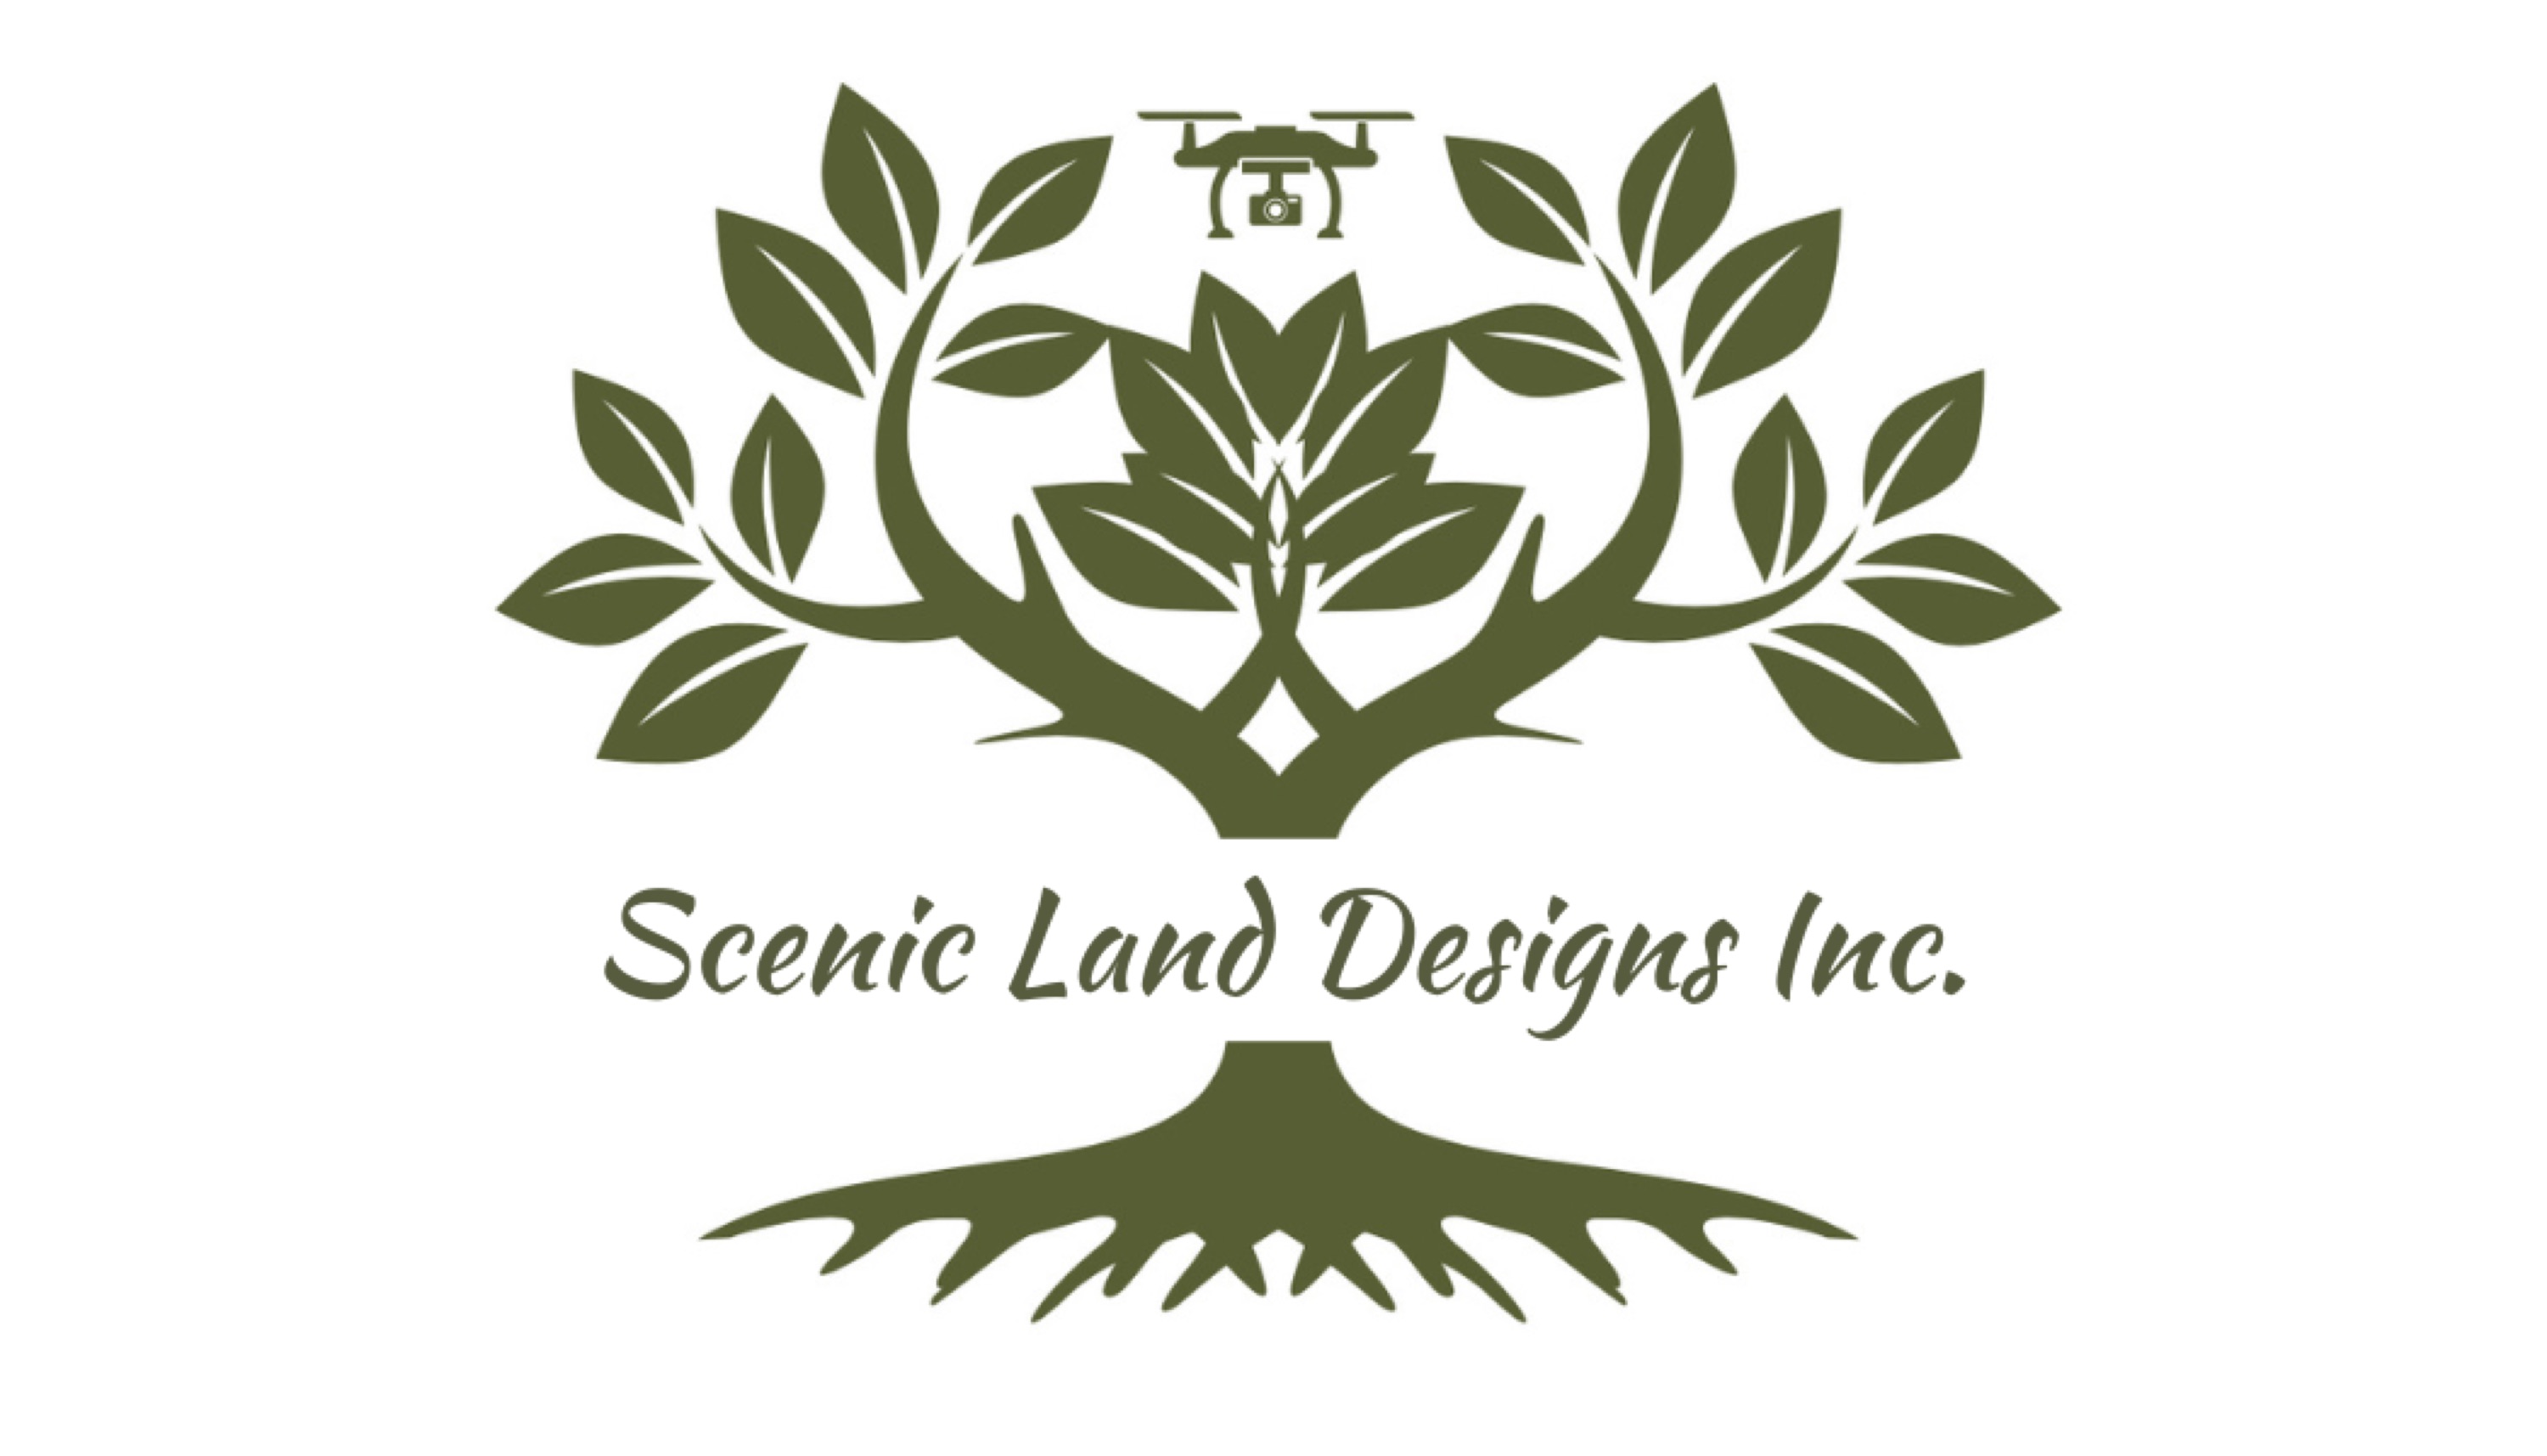 Scenic Land Design's Inc Logo